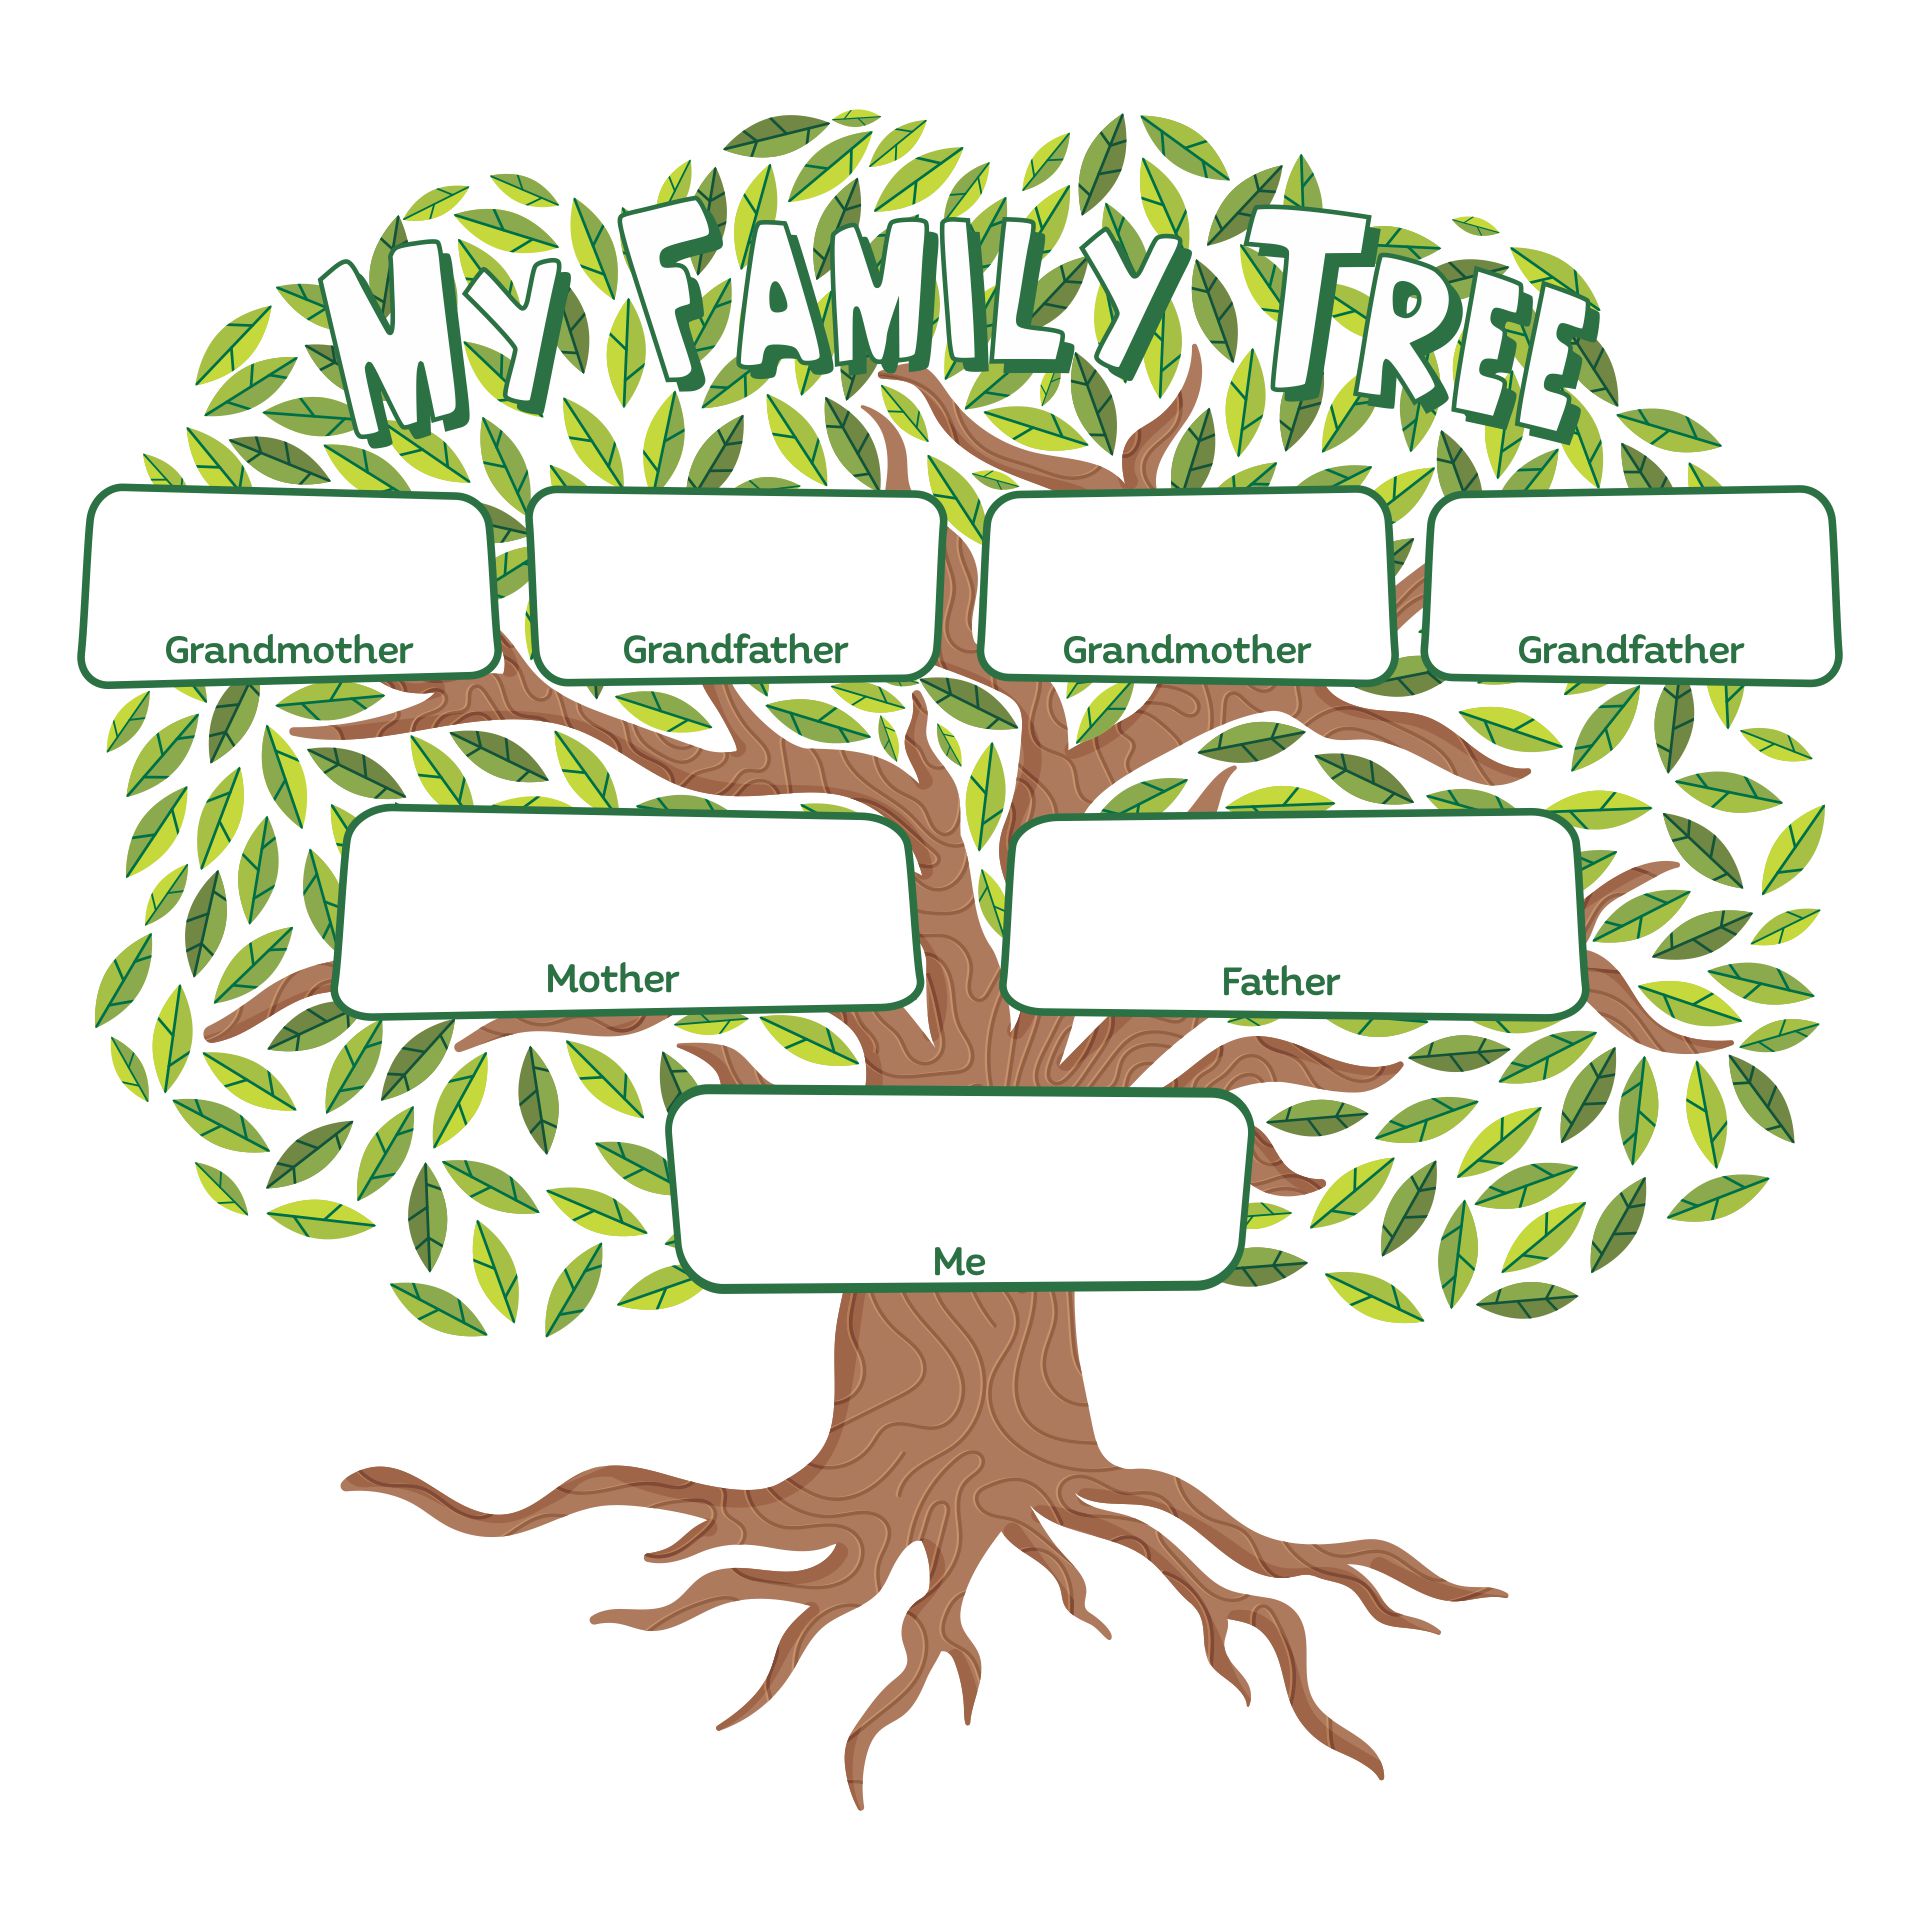 family tree worksheet printable